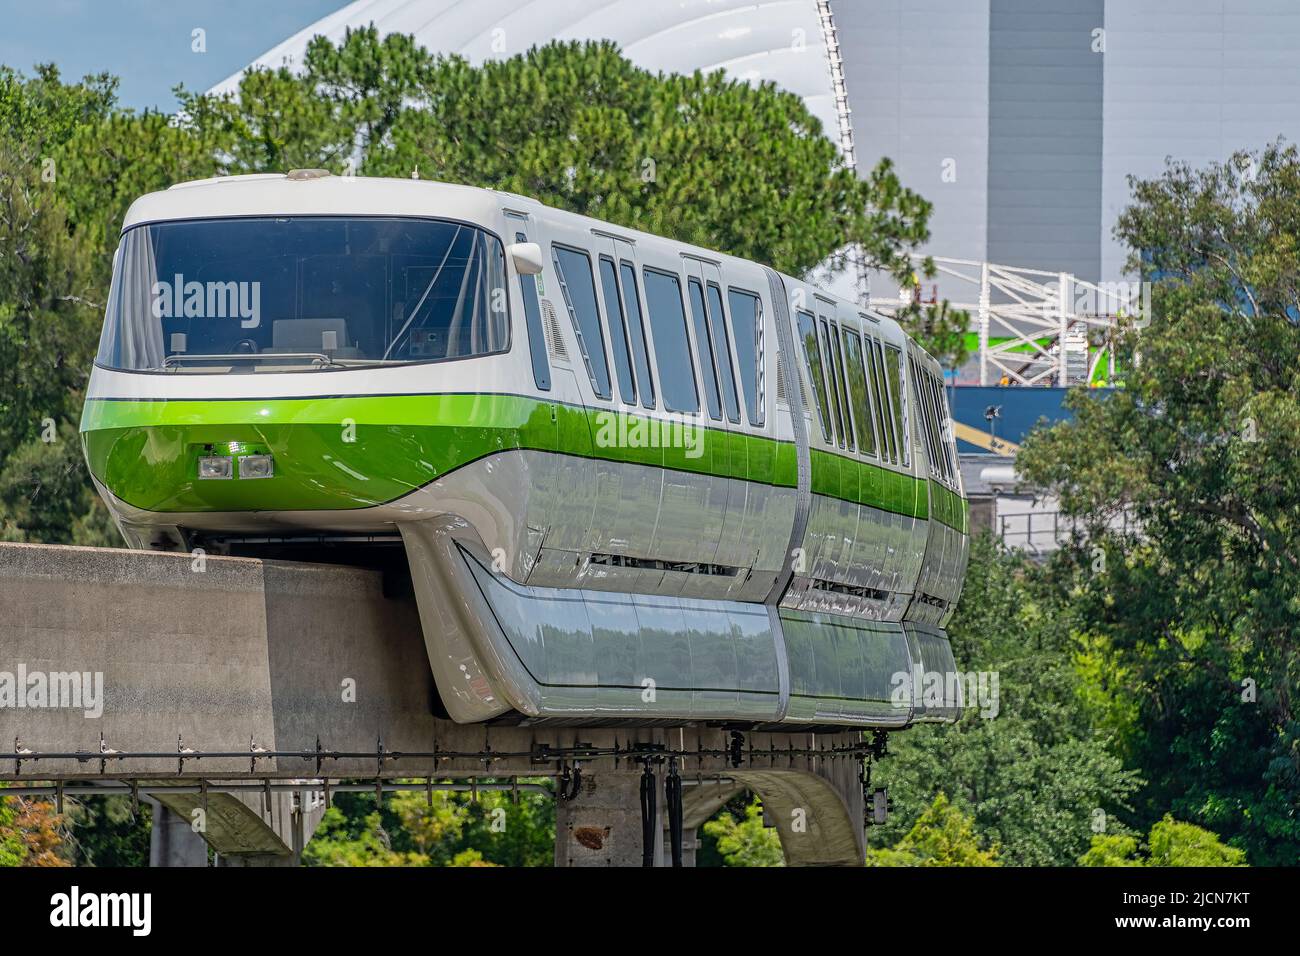 Monorail Green train at Disney World resort in Florida Stock Photo